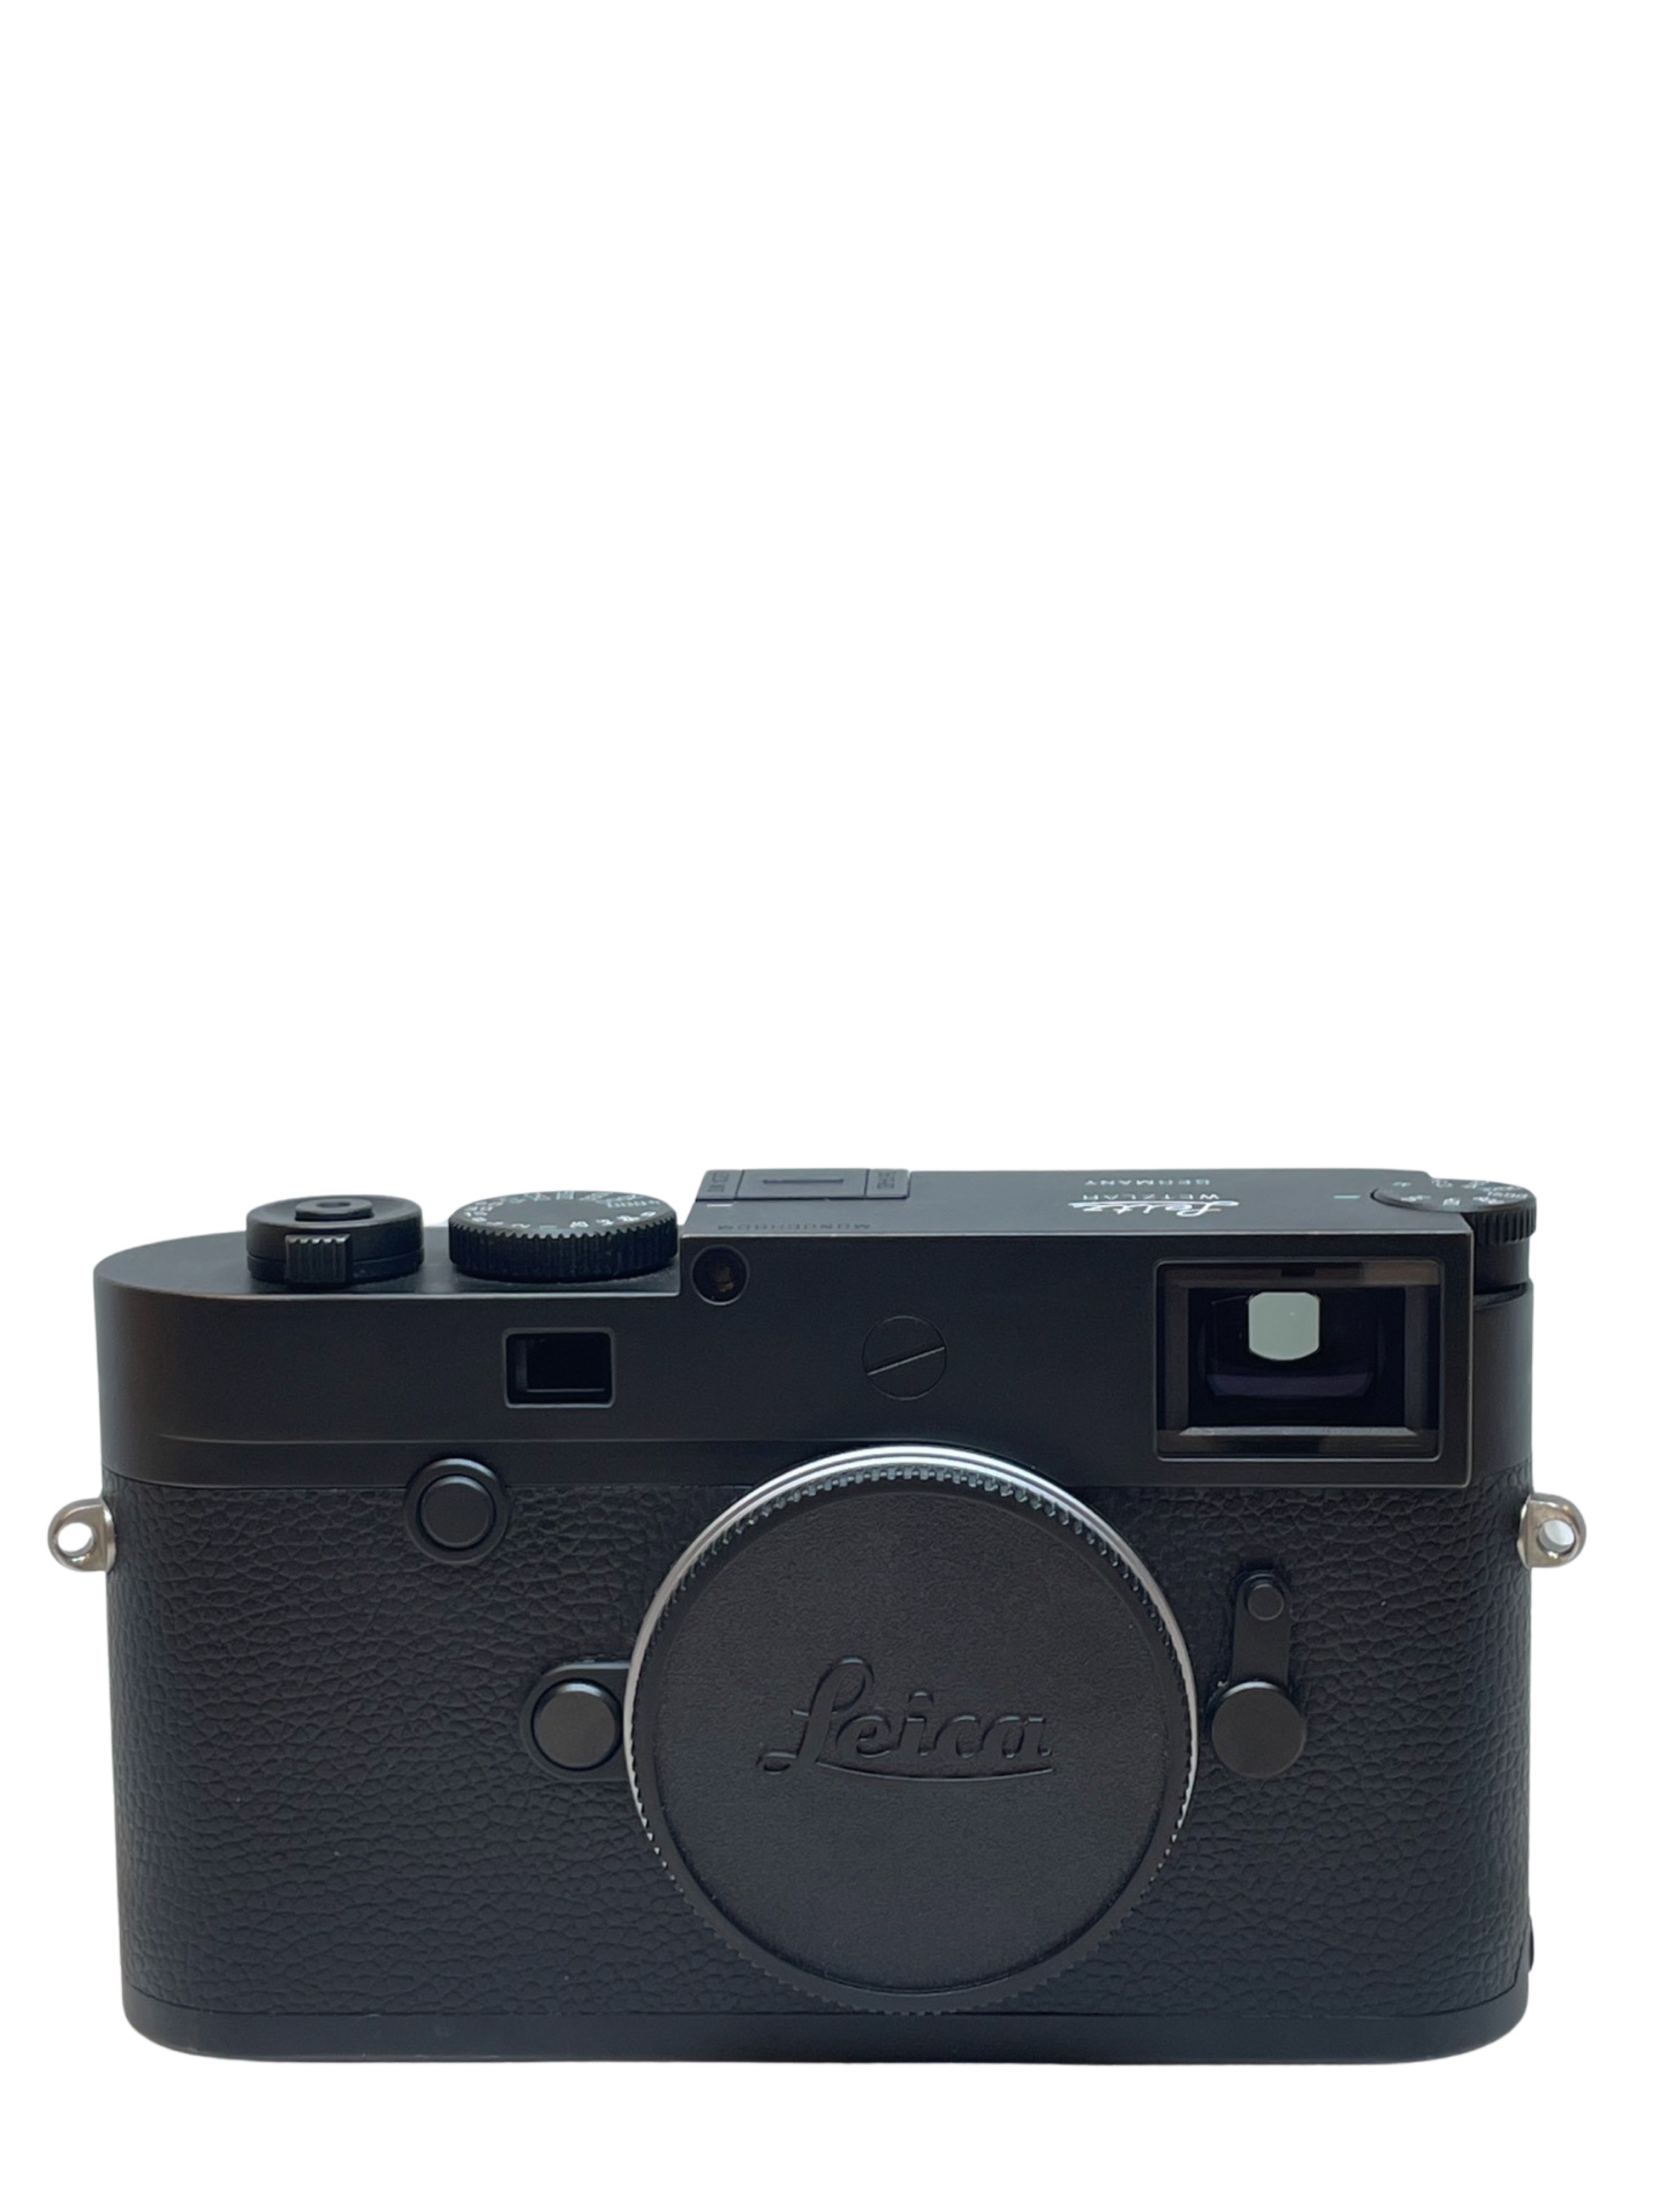 Leica M10 Monochrom “Leitz Wetzlar” Edition